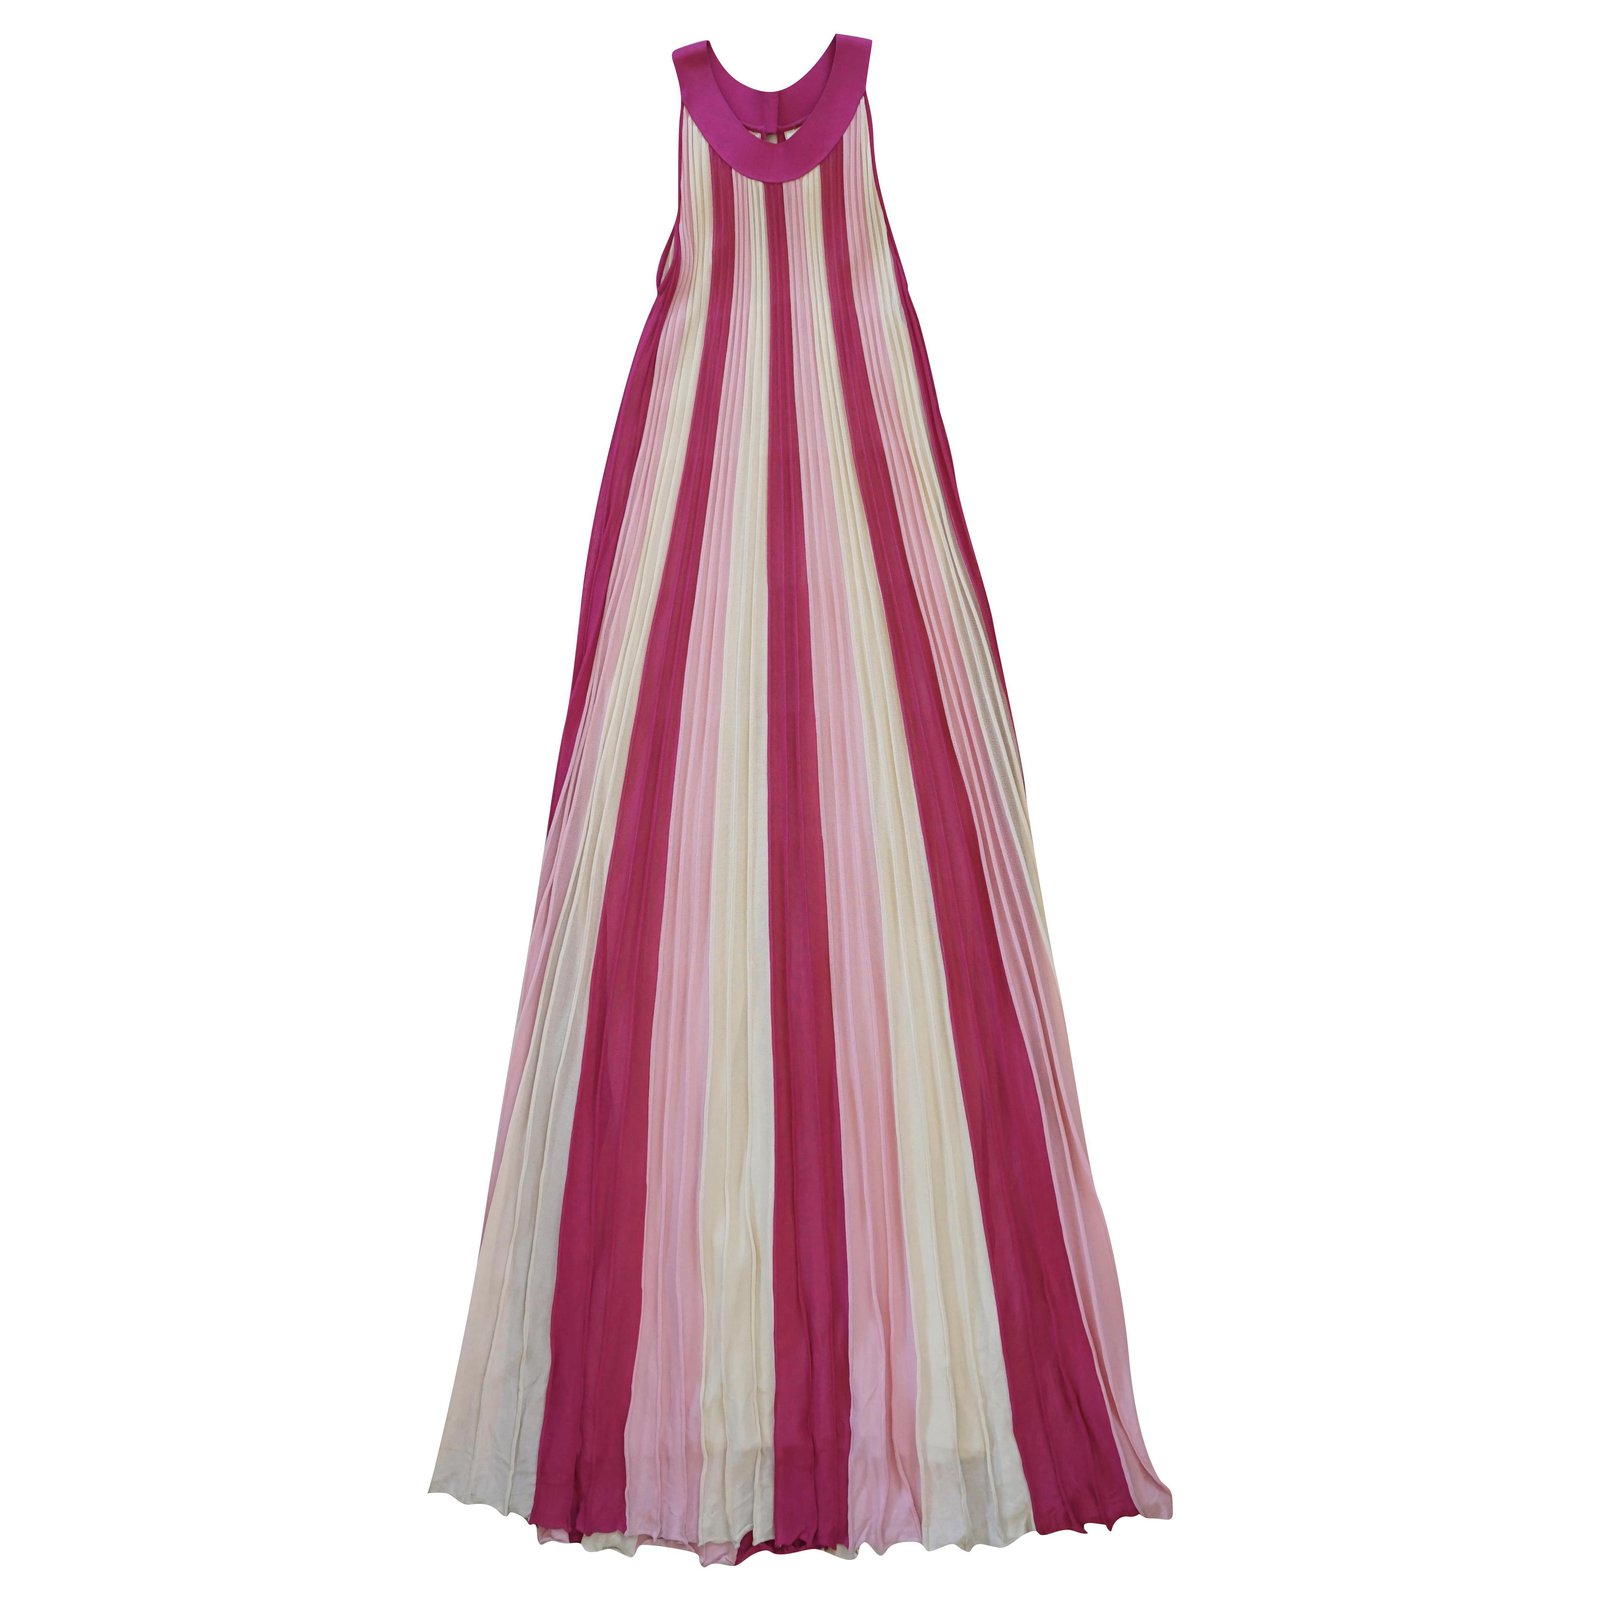 christian dior pink dress